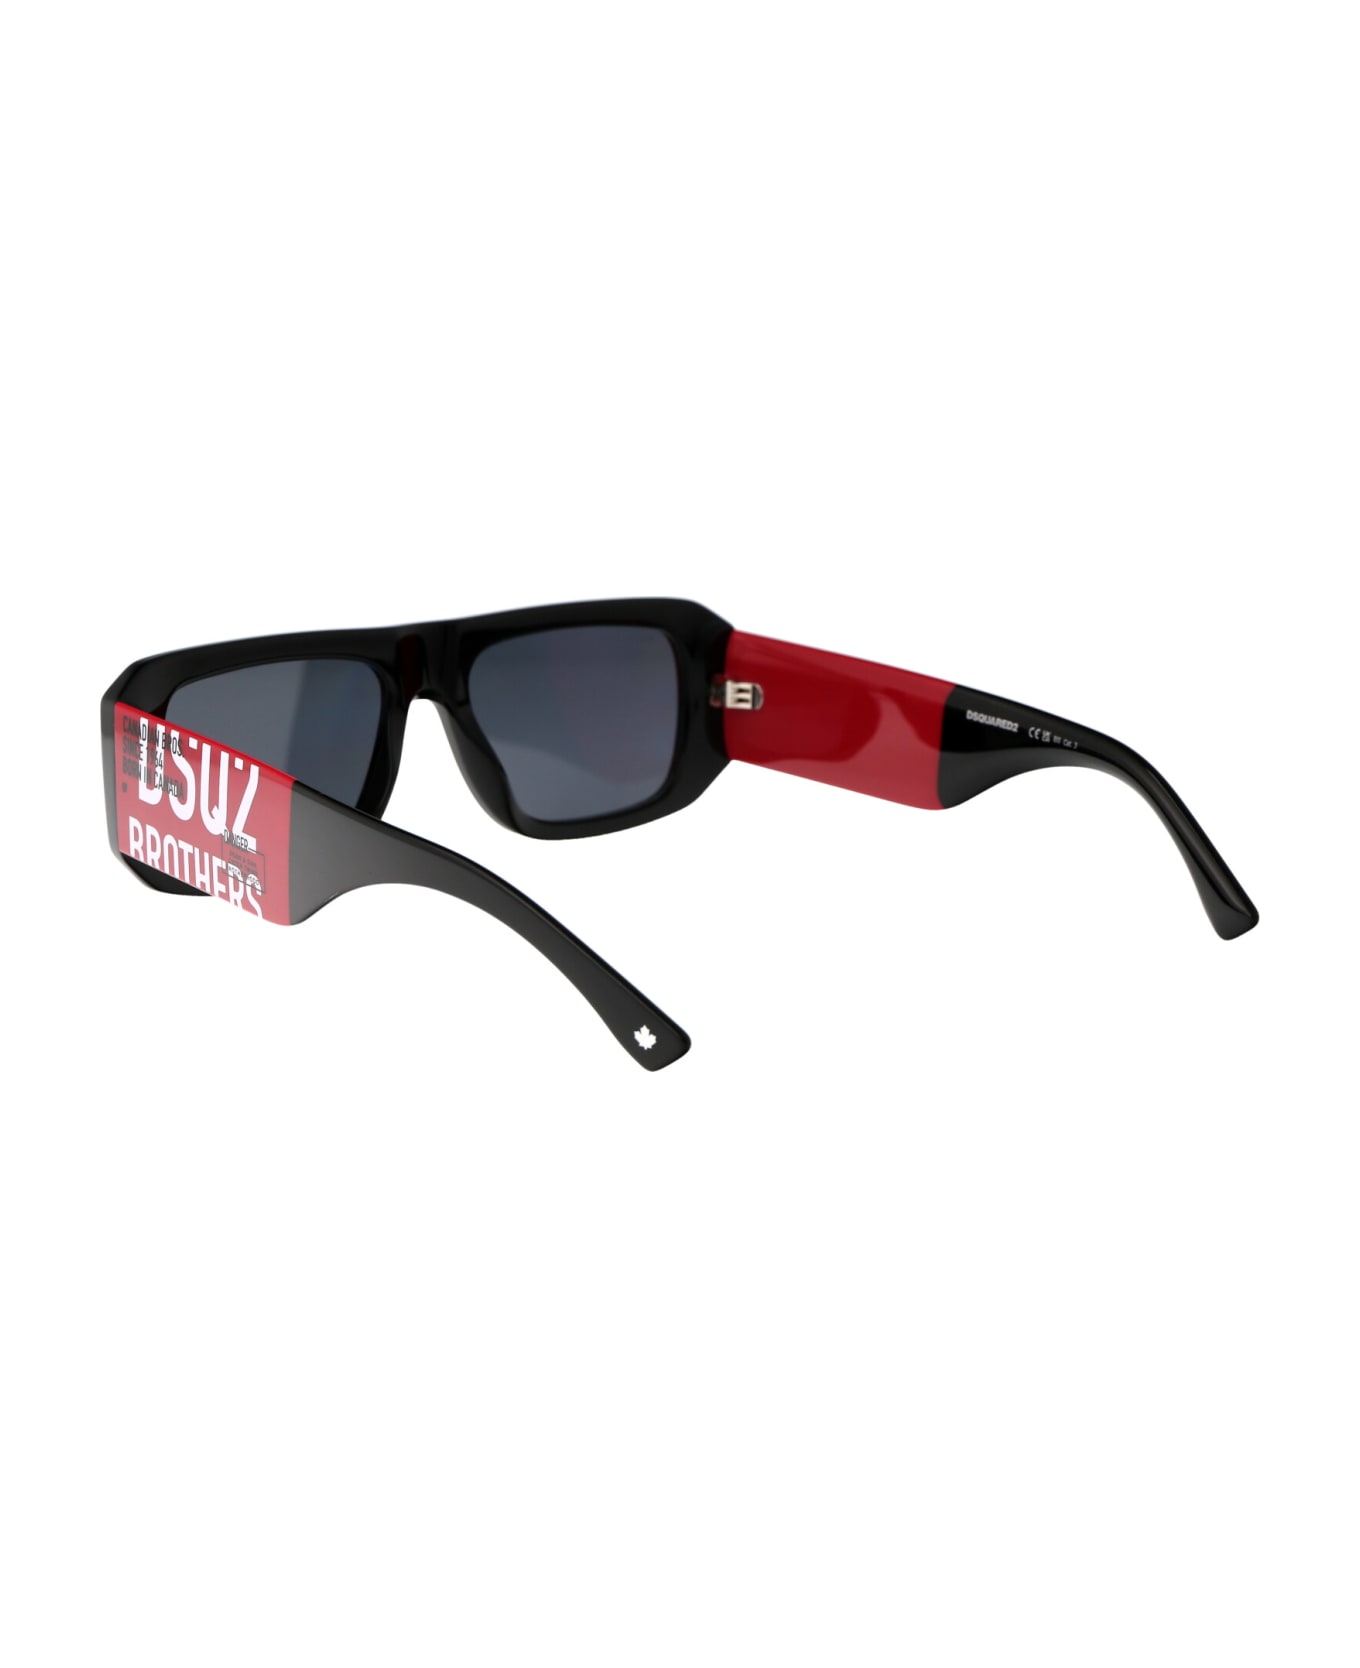 Dsquared2 Eyewear D2 0107/s Sunglasses - Lapima tortoiseshell-effect tinted sunglasses